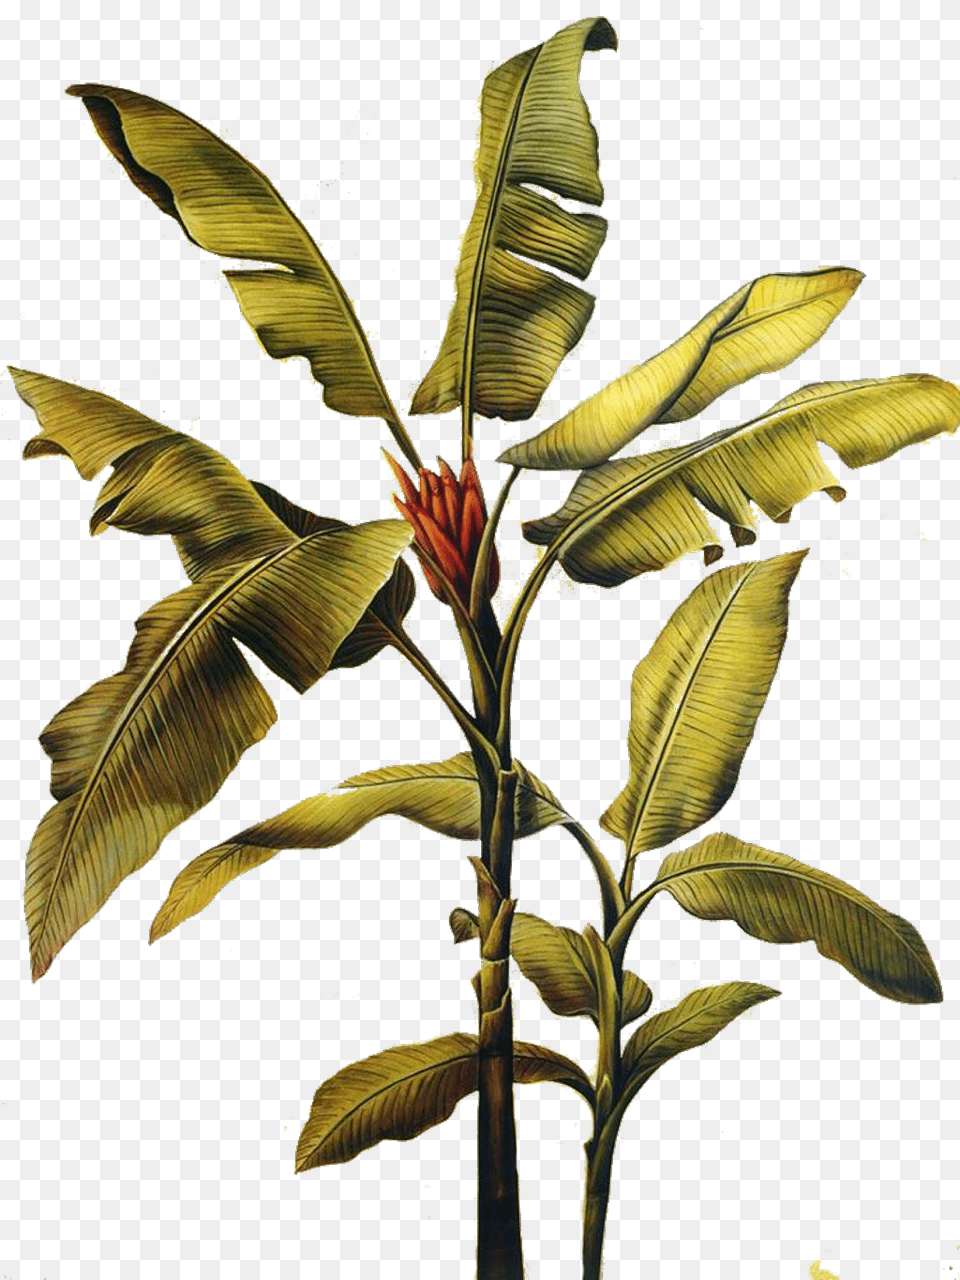 Banana Leaf Art Painting Freetoedit Banana Leaf Plant Painting, Flower, Food, Fruit, Produce Png Image